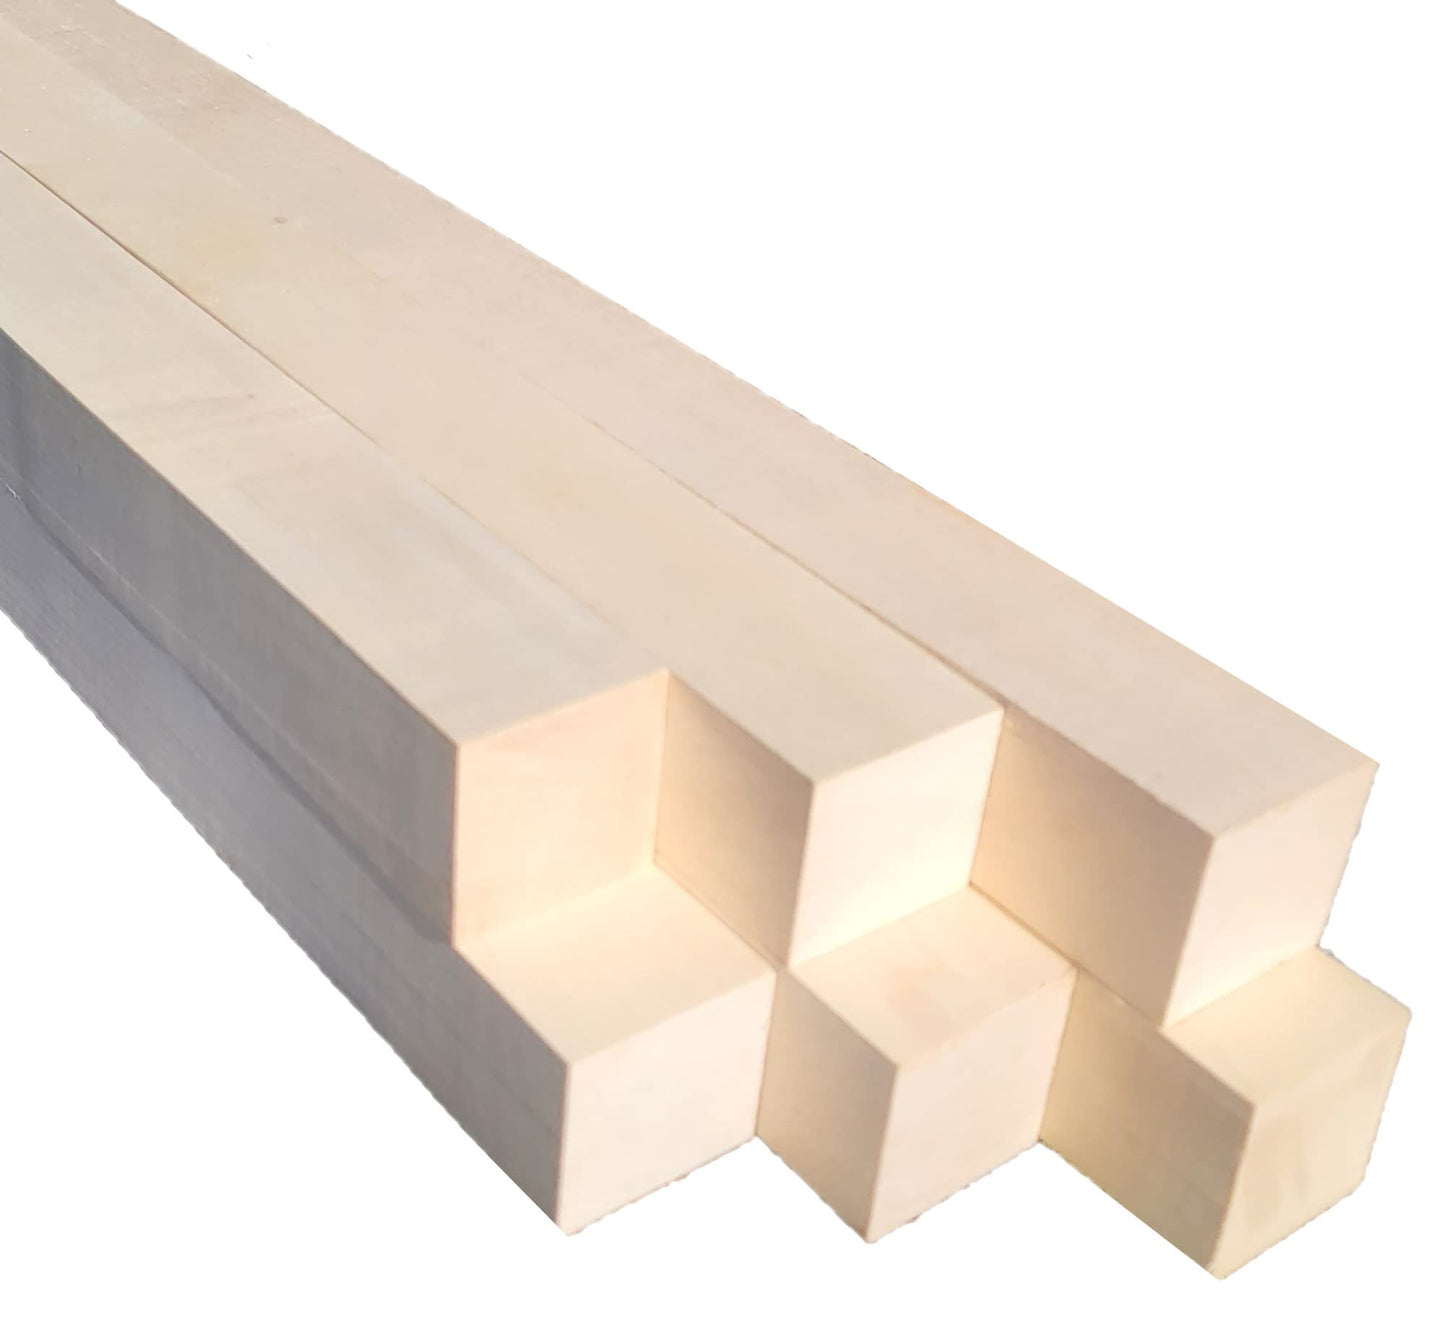 Exotic Wood Zone | Hard Maple Turning Blanks - 4 Pack (2" x 2" x 8")